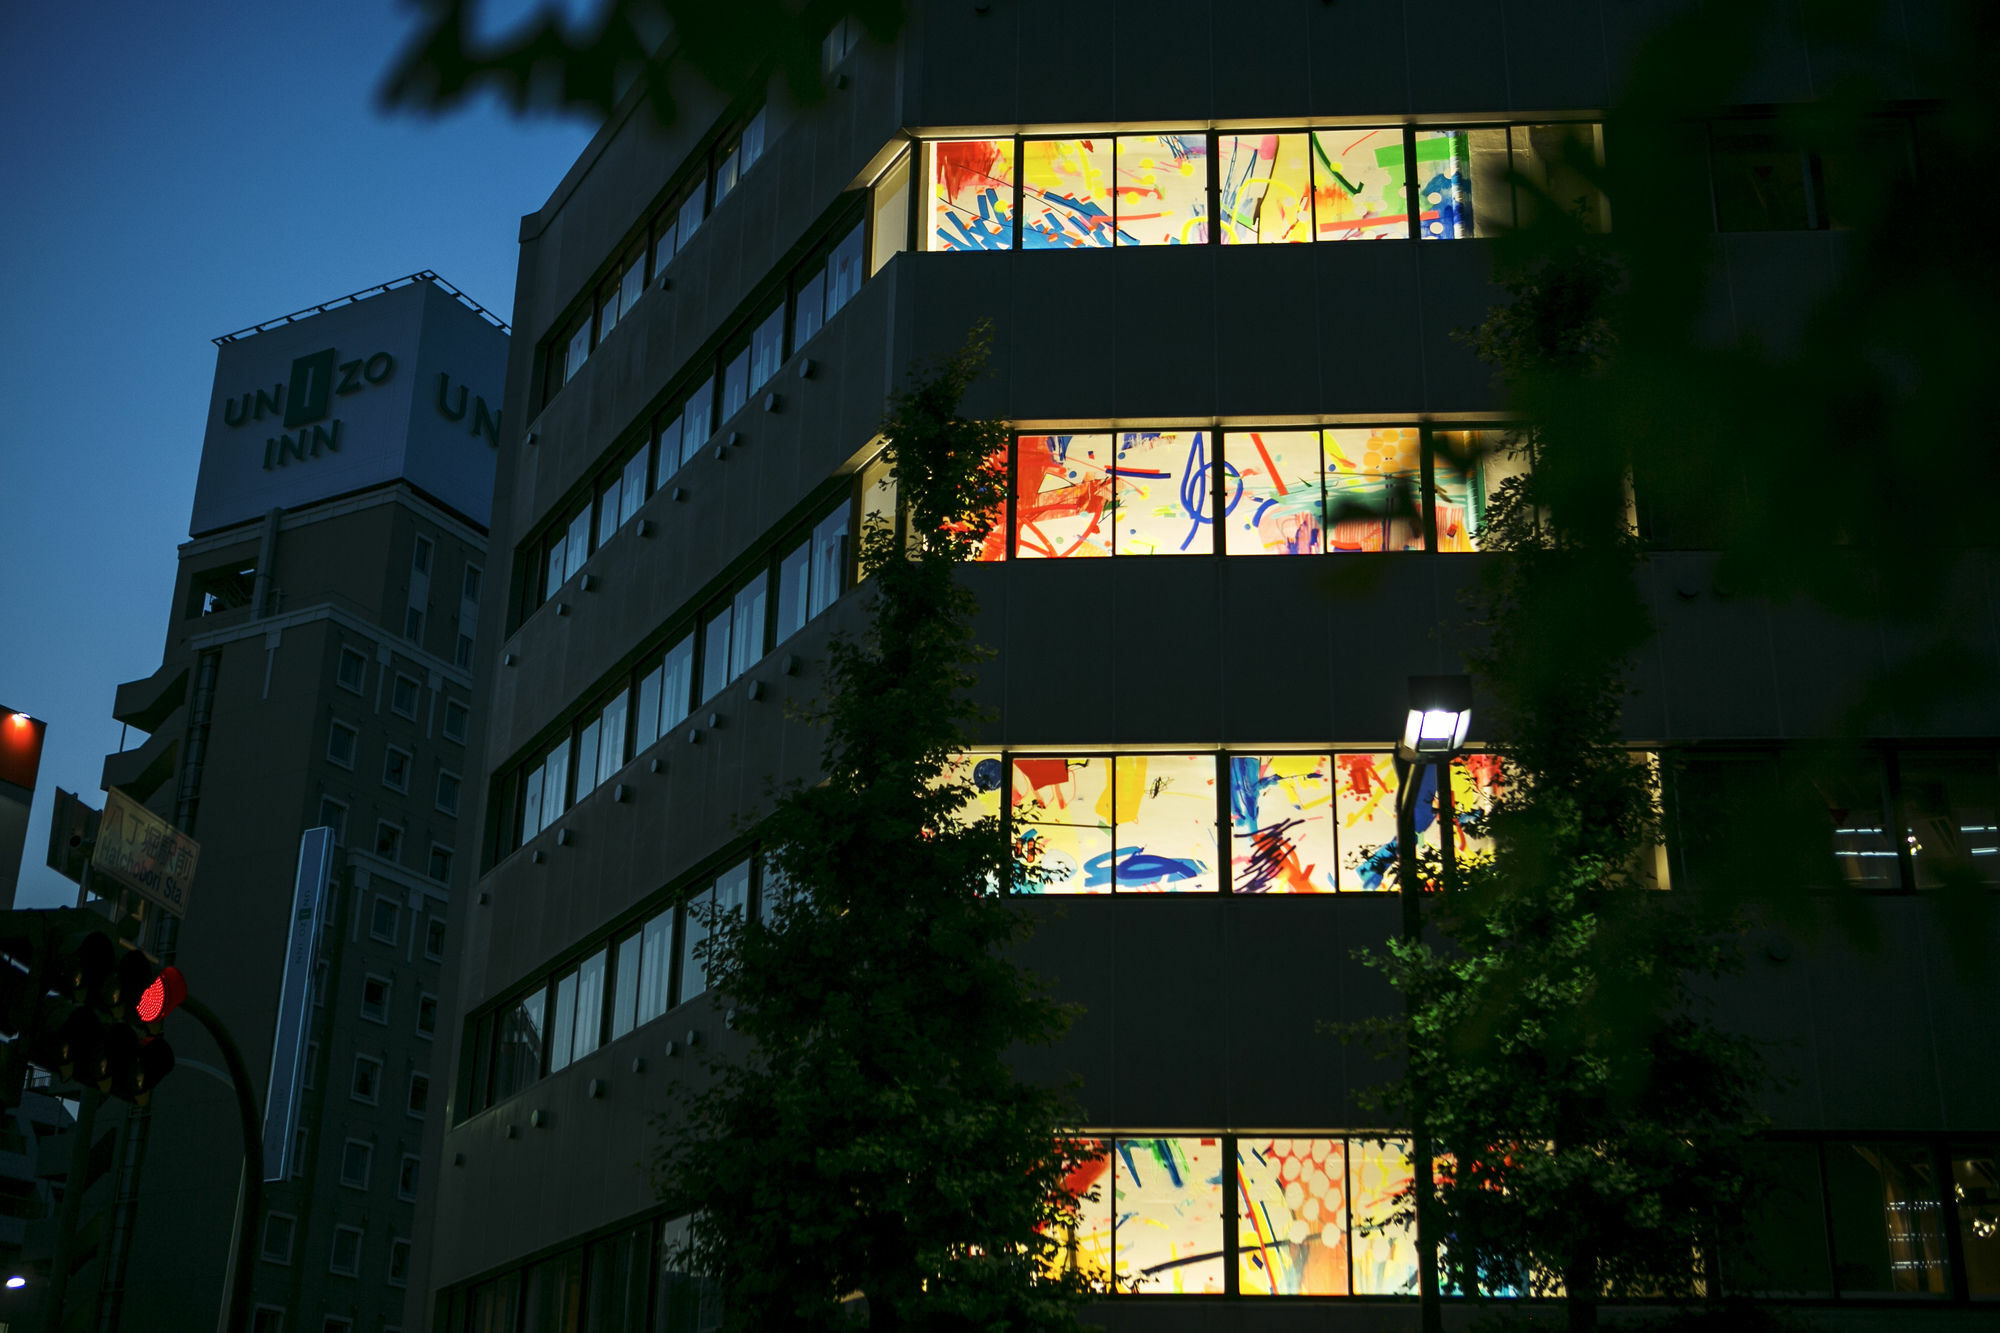 Wise Owl Hostels Tokyo Exterior photo